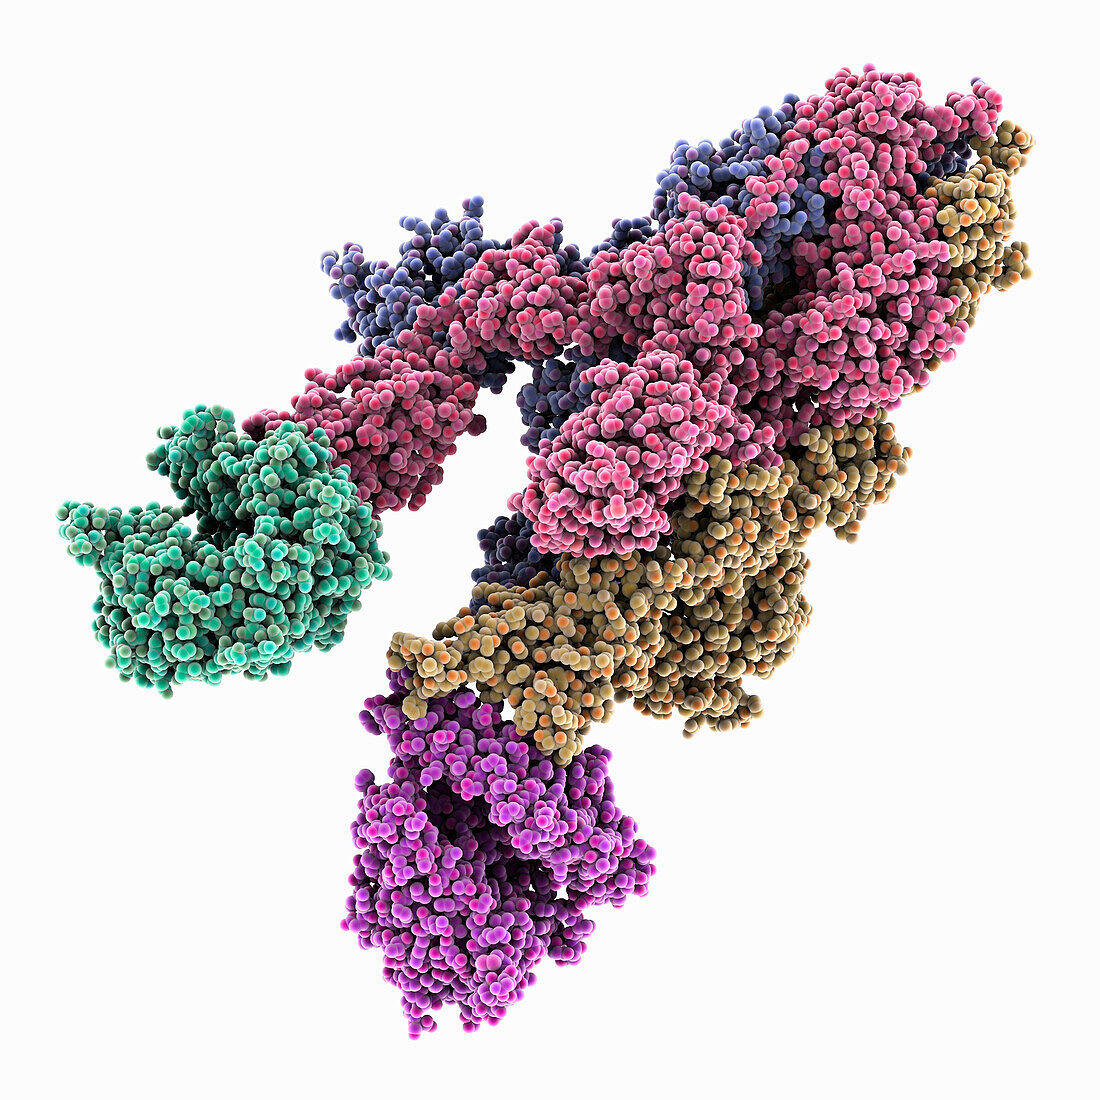 SARS-CoV-2 spike glycoprotein complex, illustration